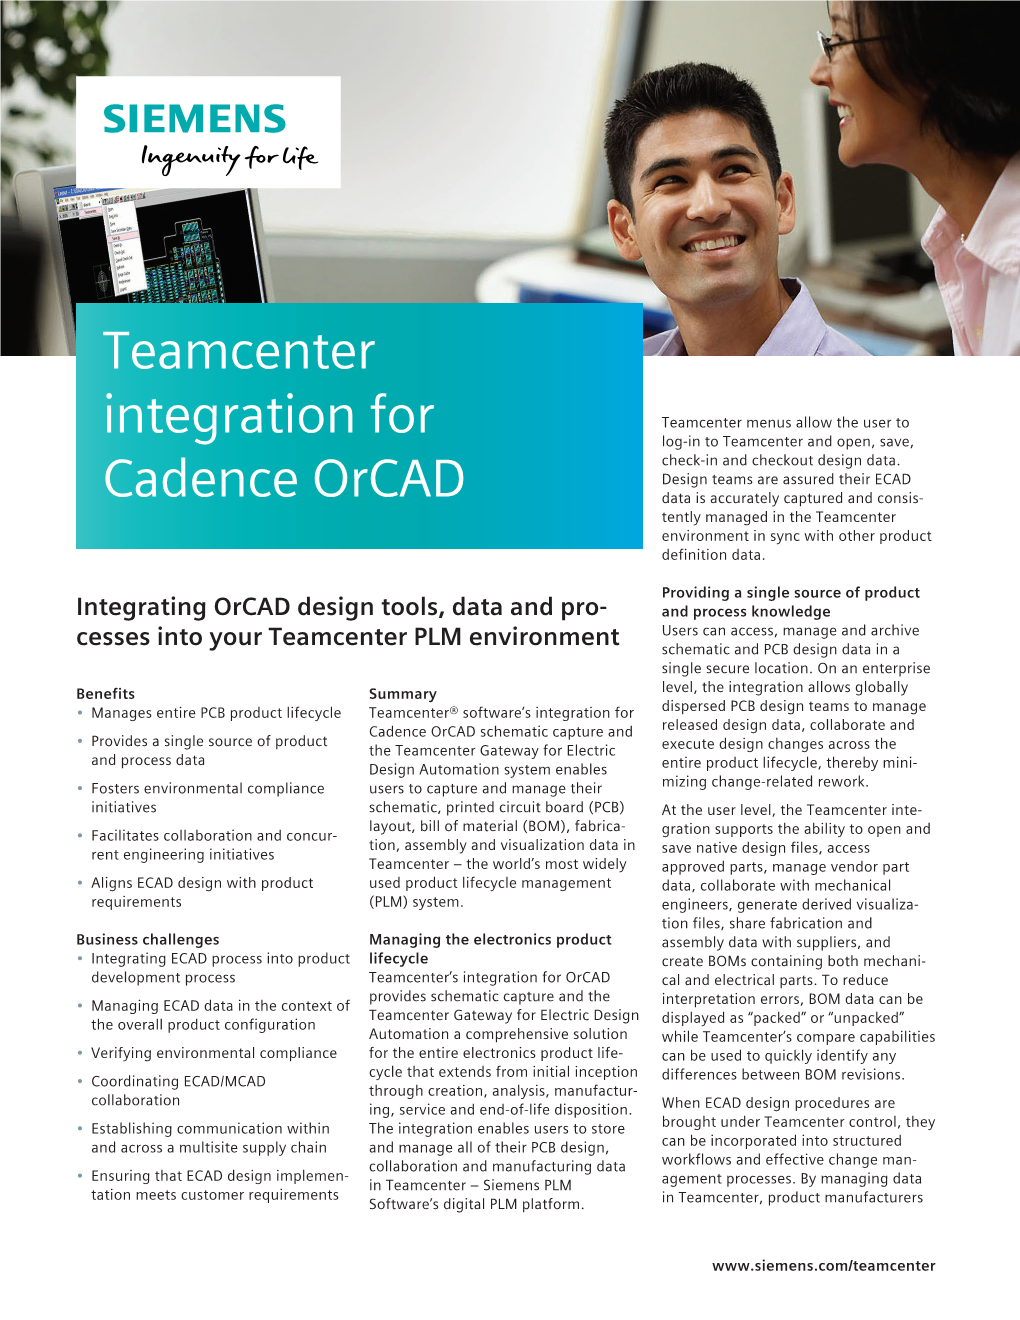 Teamcenter Cadence Orcad Integration Fact Sheet